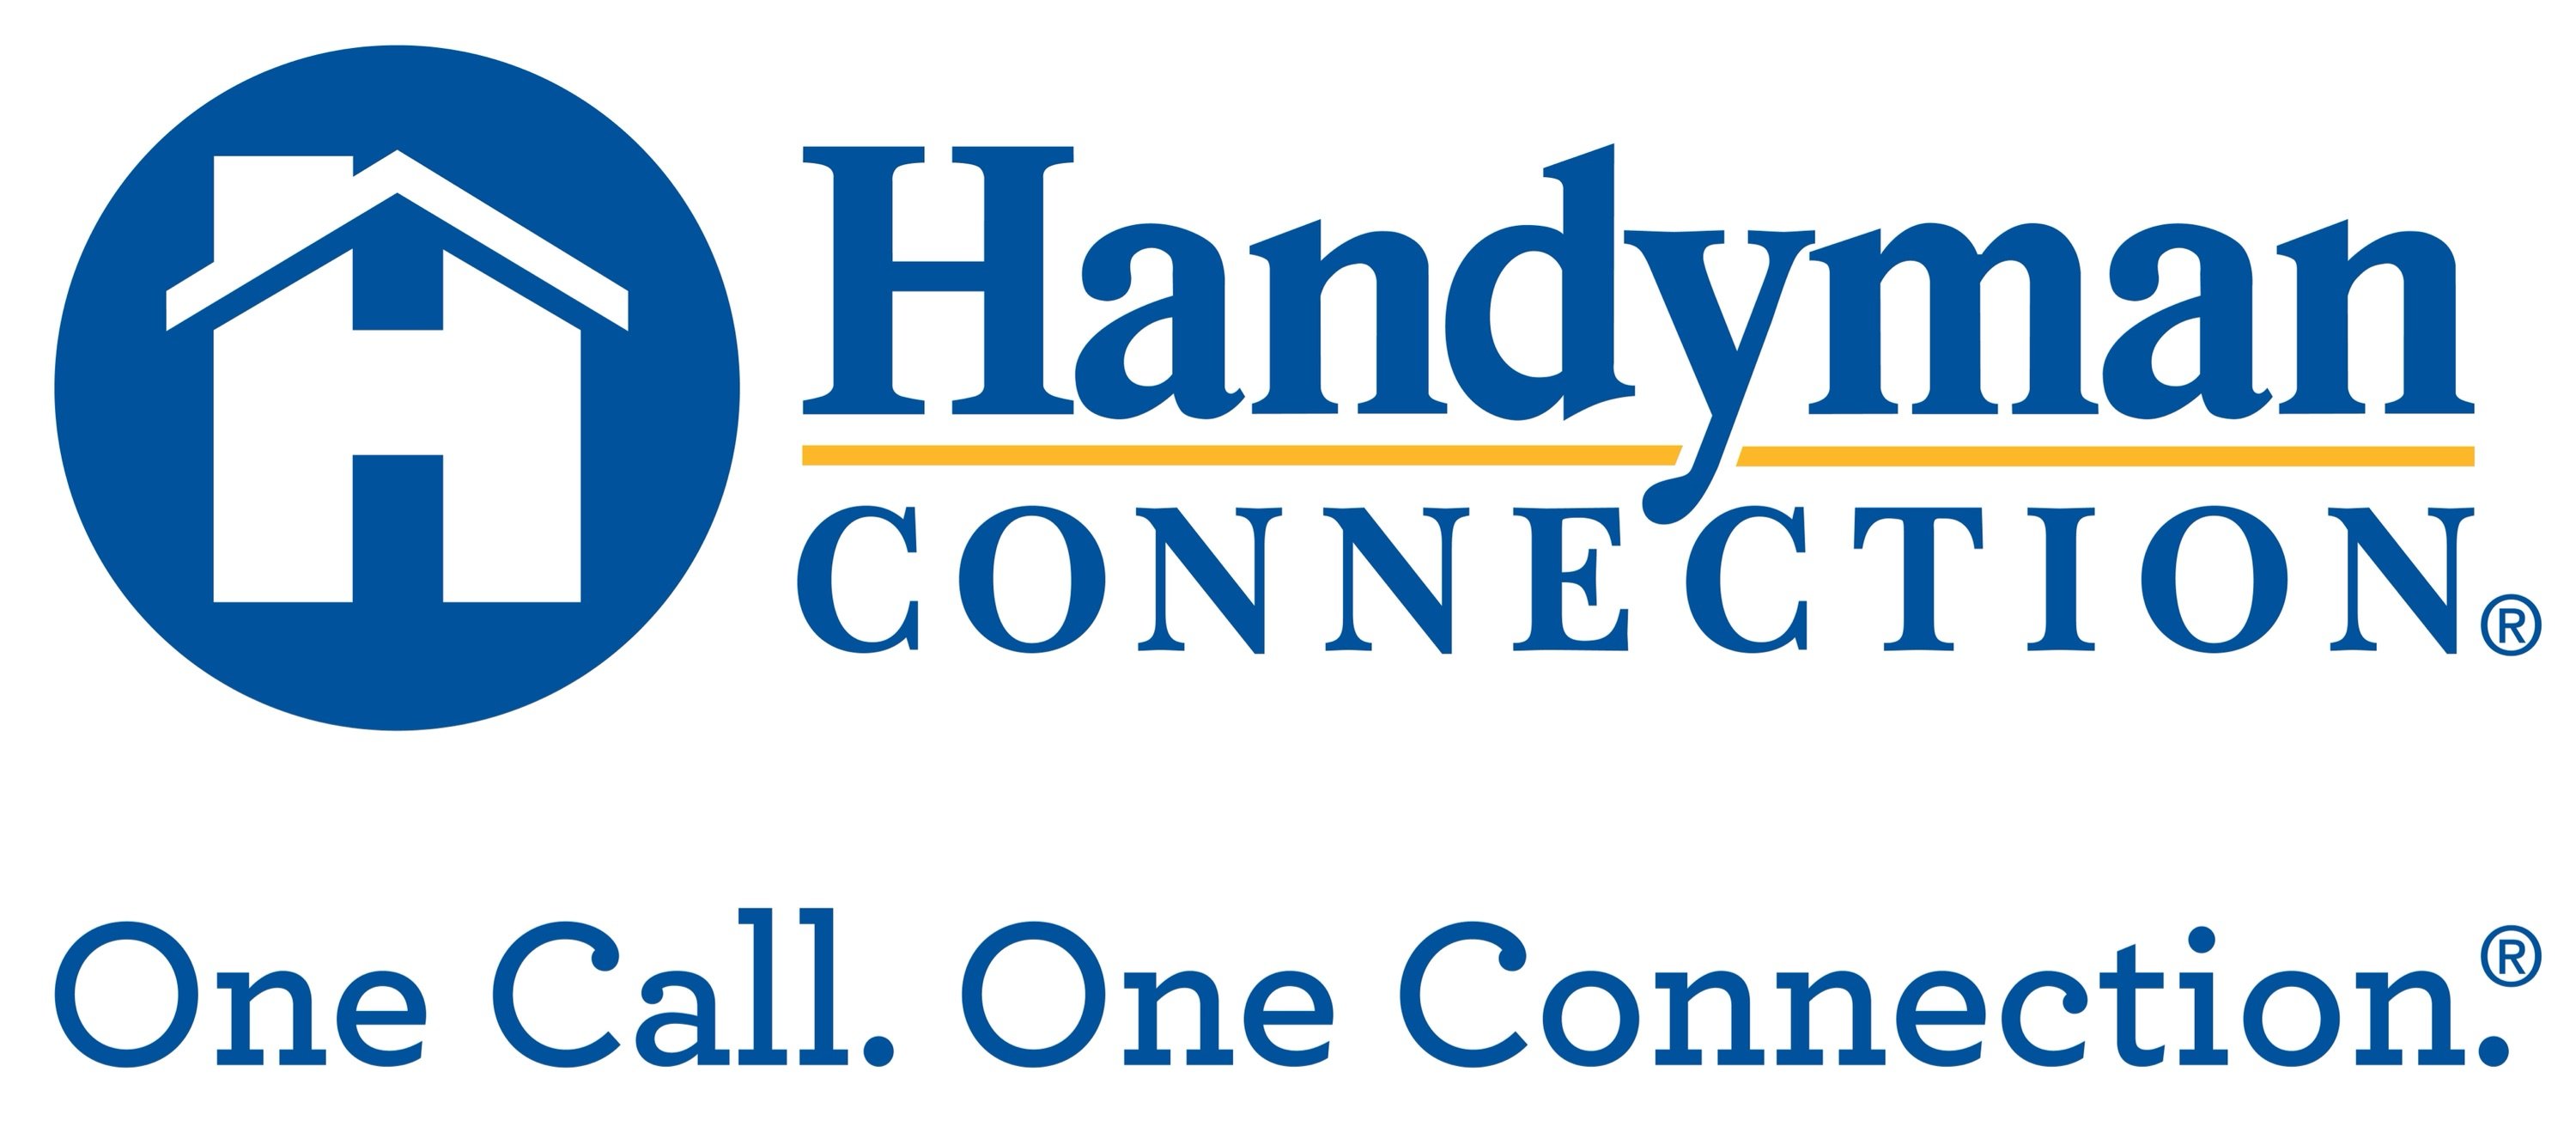 Handyman Connection of Rockford Logo